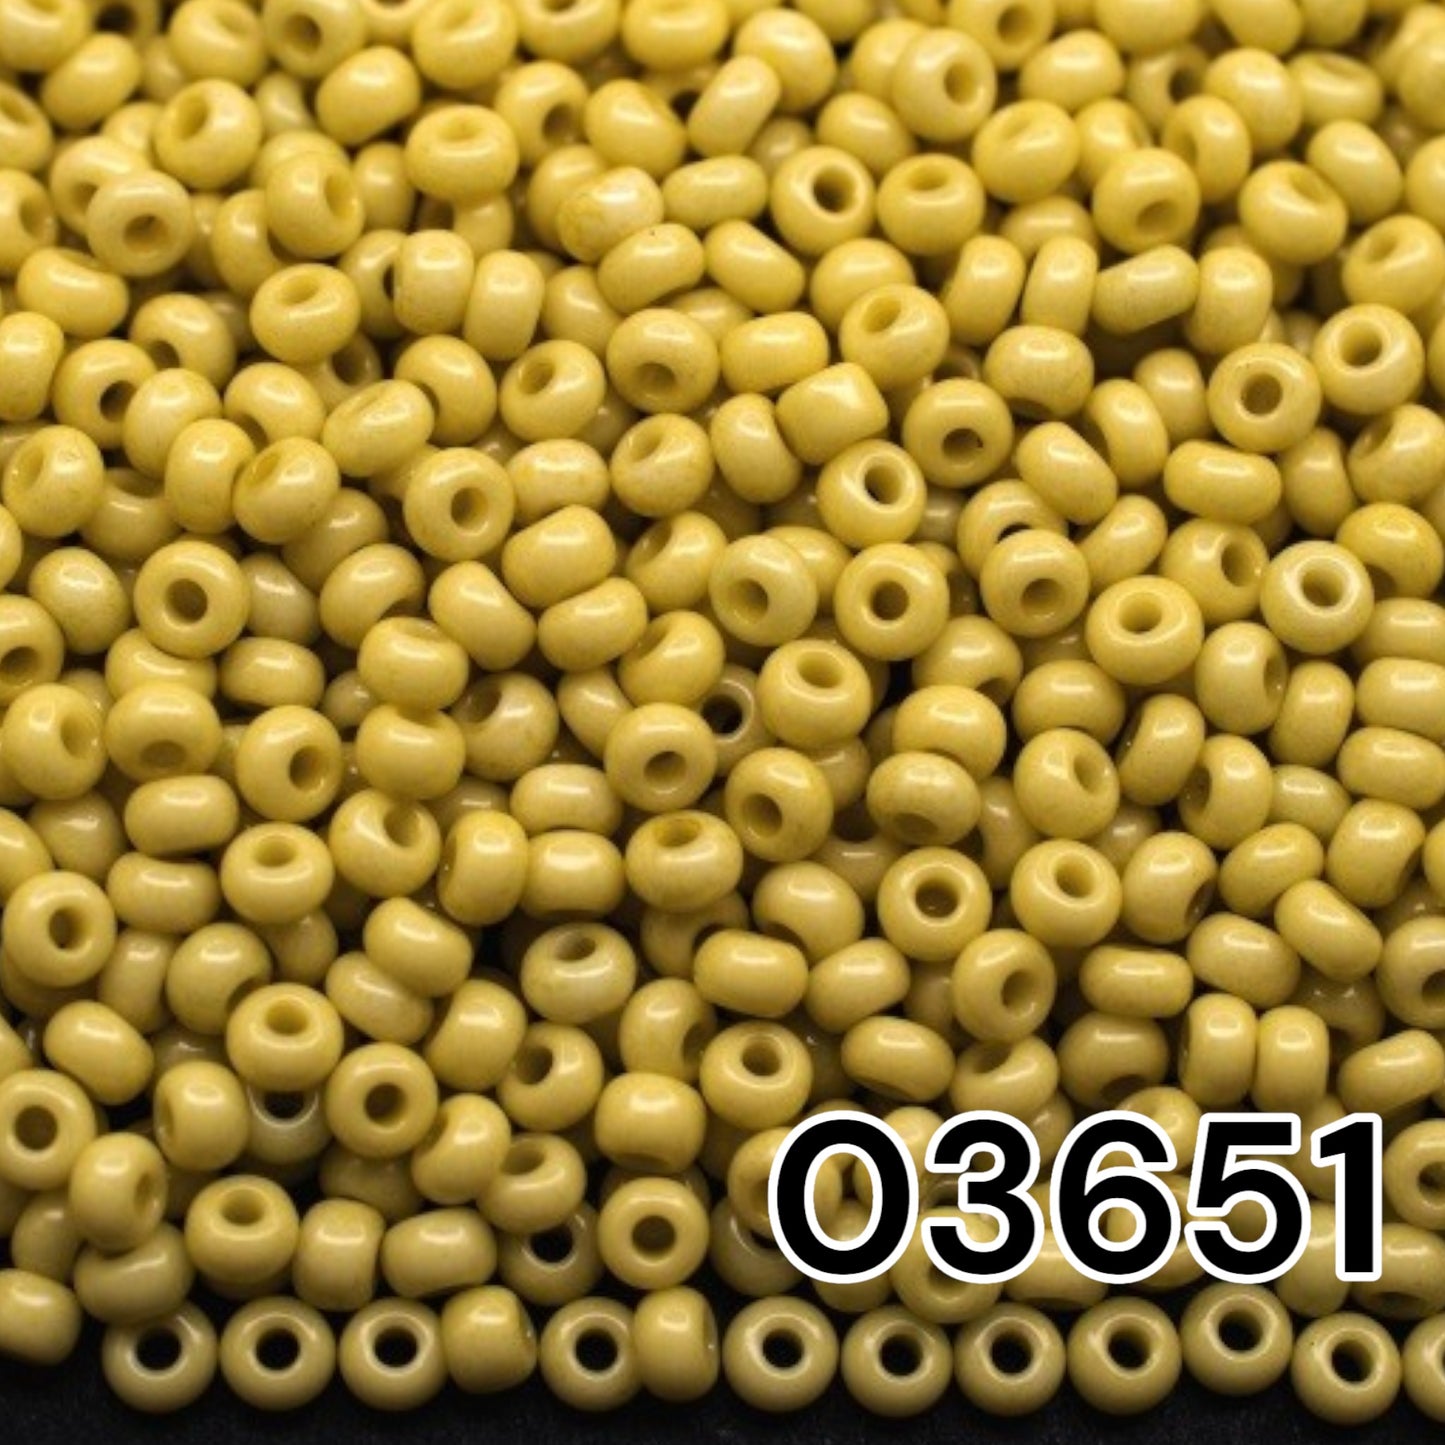 03651 Czech seed beads PRECIOSA round 10/0 light yellow. Chalk - Solgel Dyed.